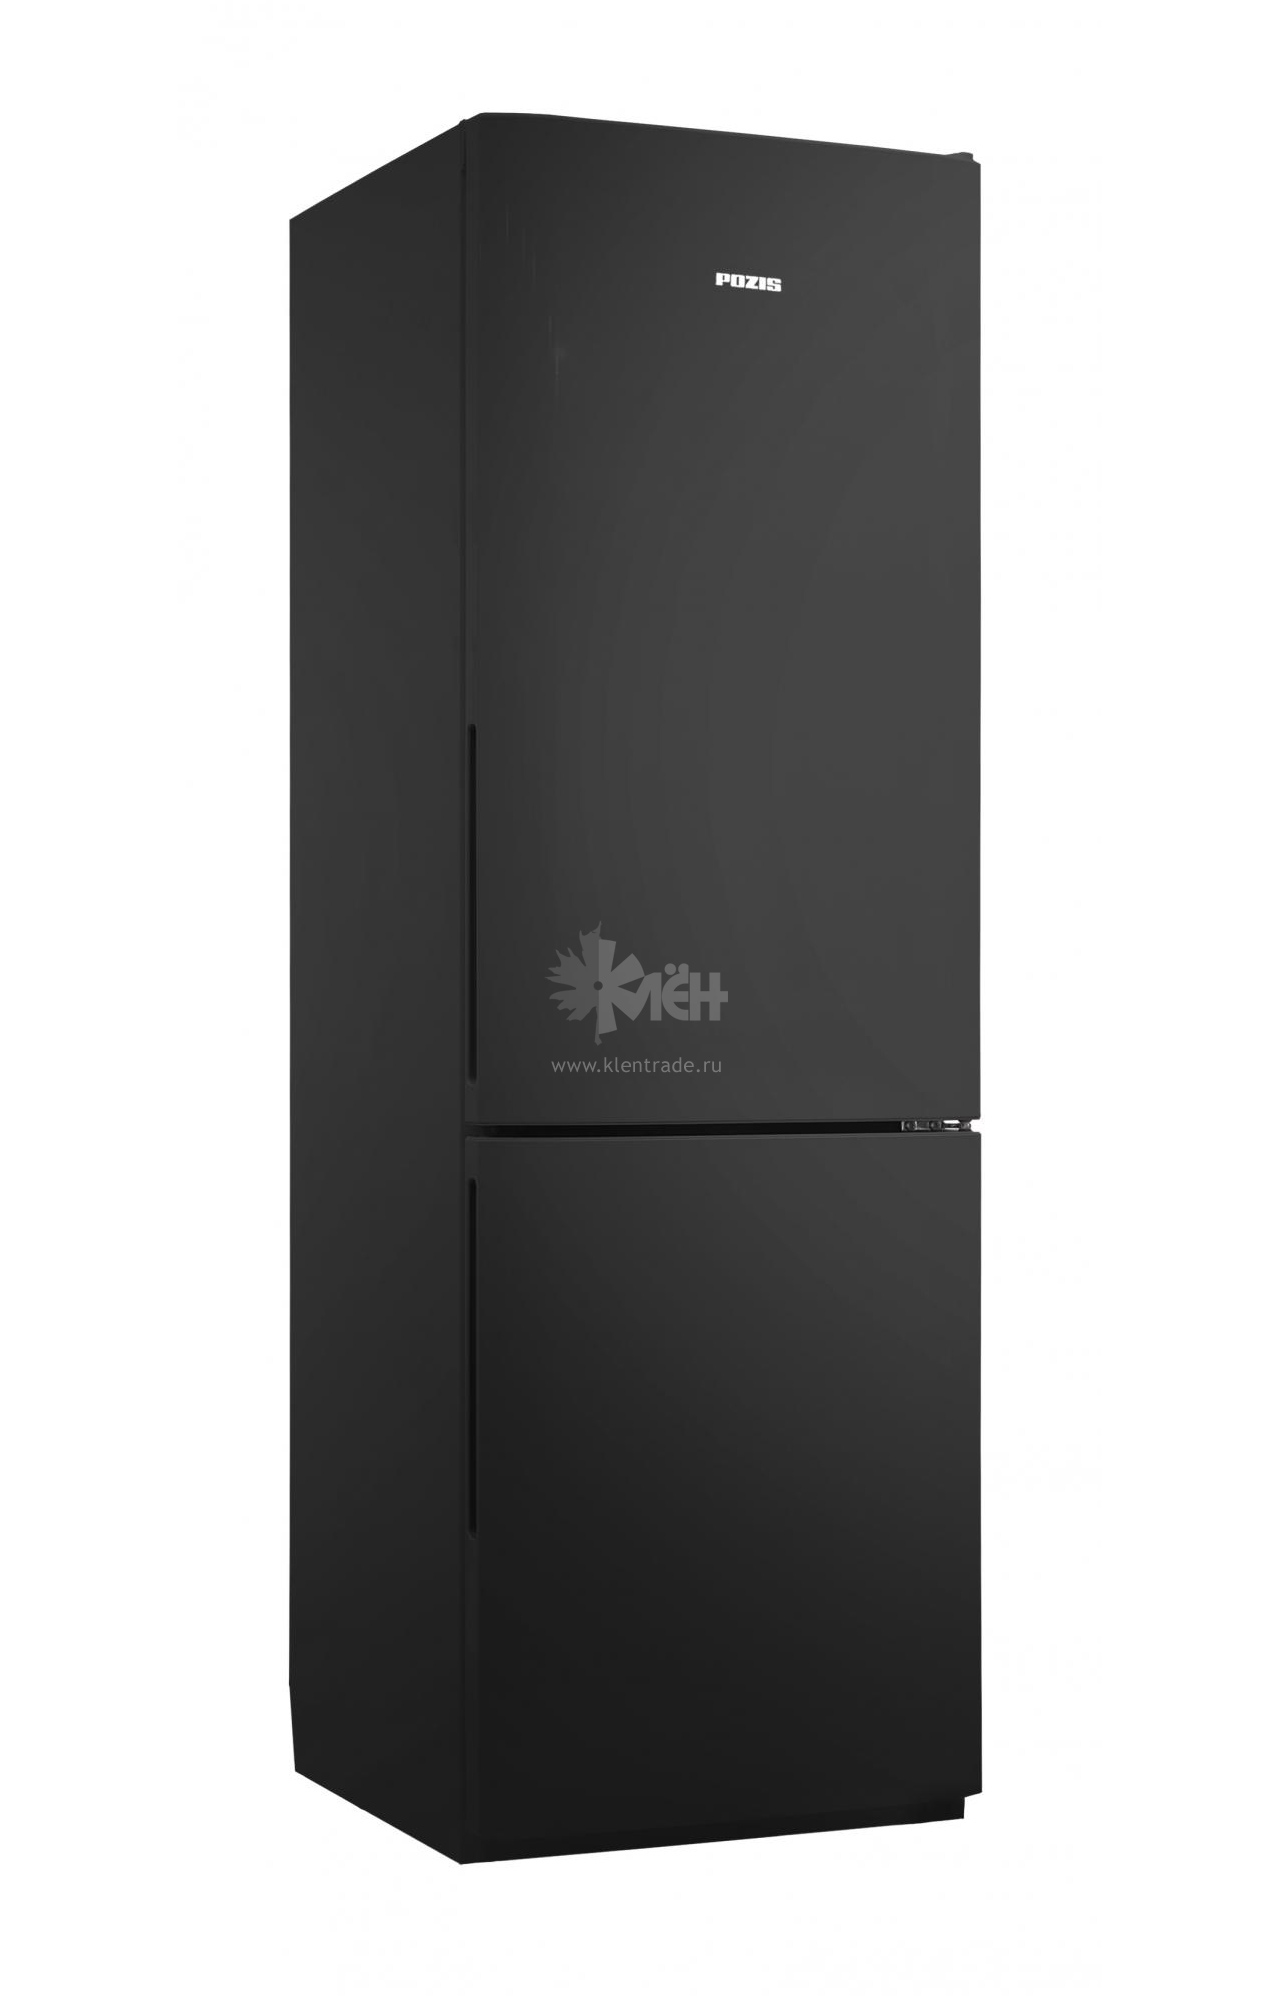 Rk fnf 170. Холодильник Pozis RK FNF-170. Pozis FNF 170. Холодильник Pozis RK FNF-172 B чёрный. Холодильник Pozis RK FNF-170 B.